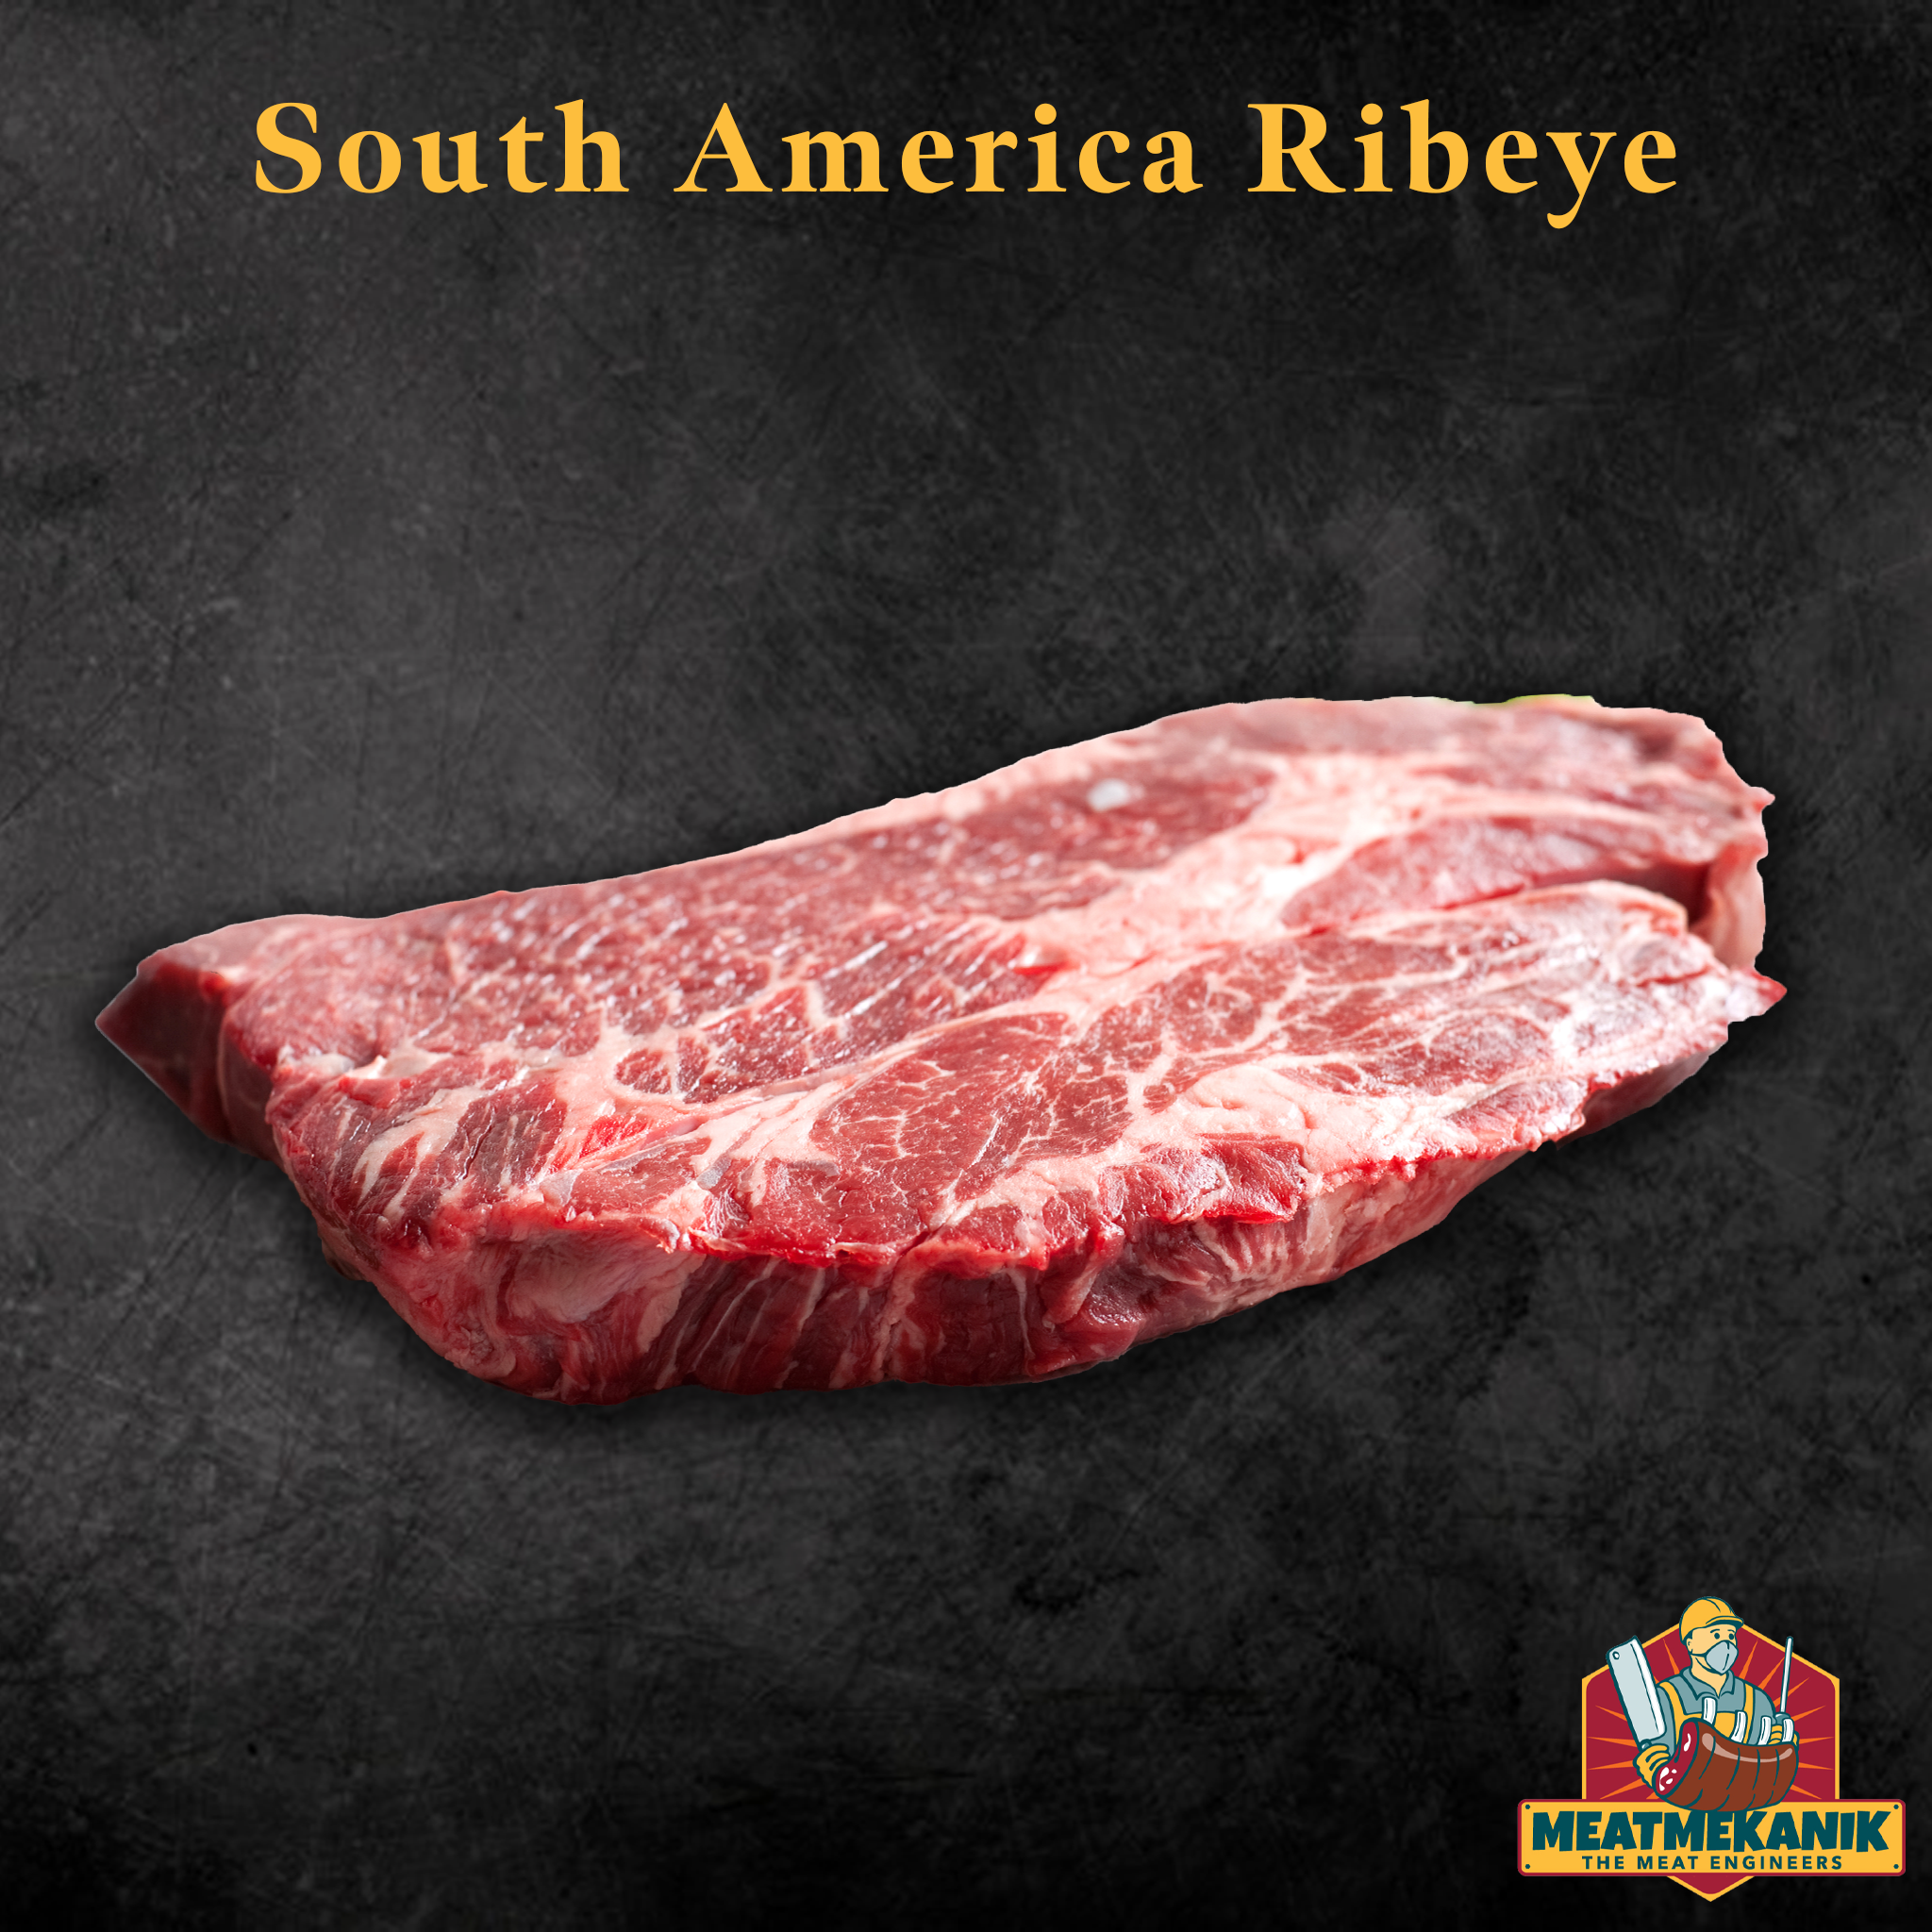 South American Ribeye - Meat Mekanik